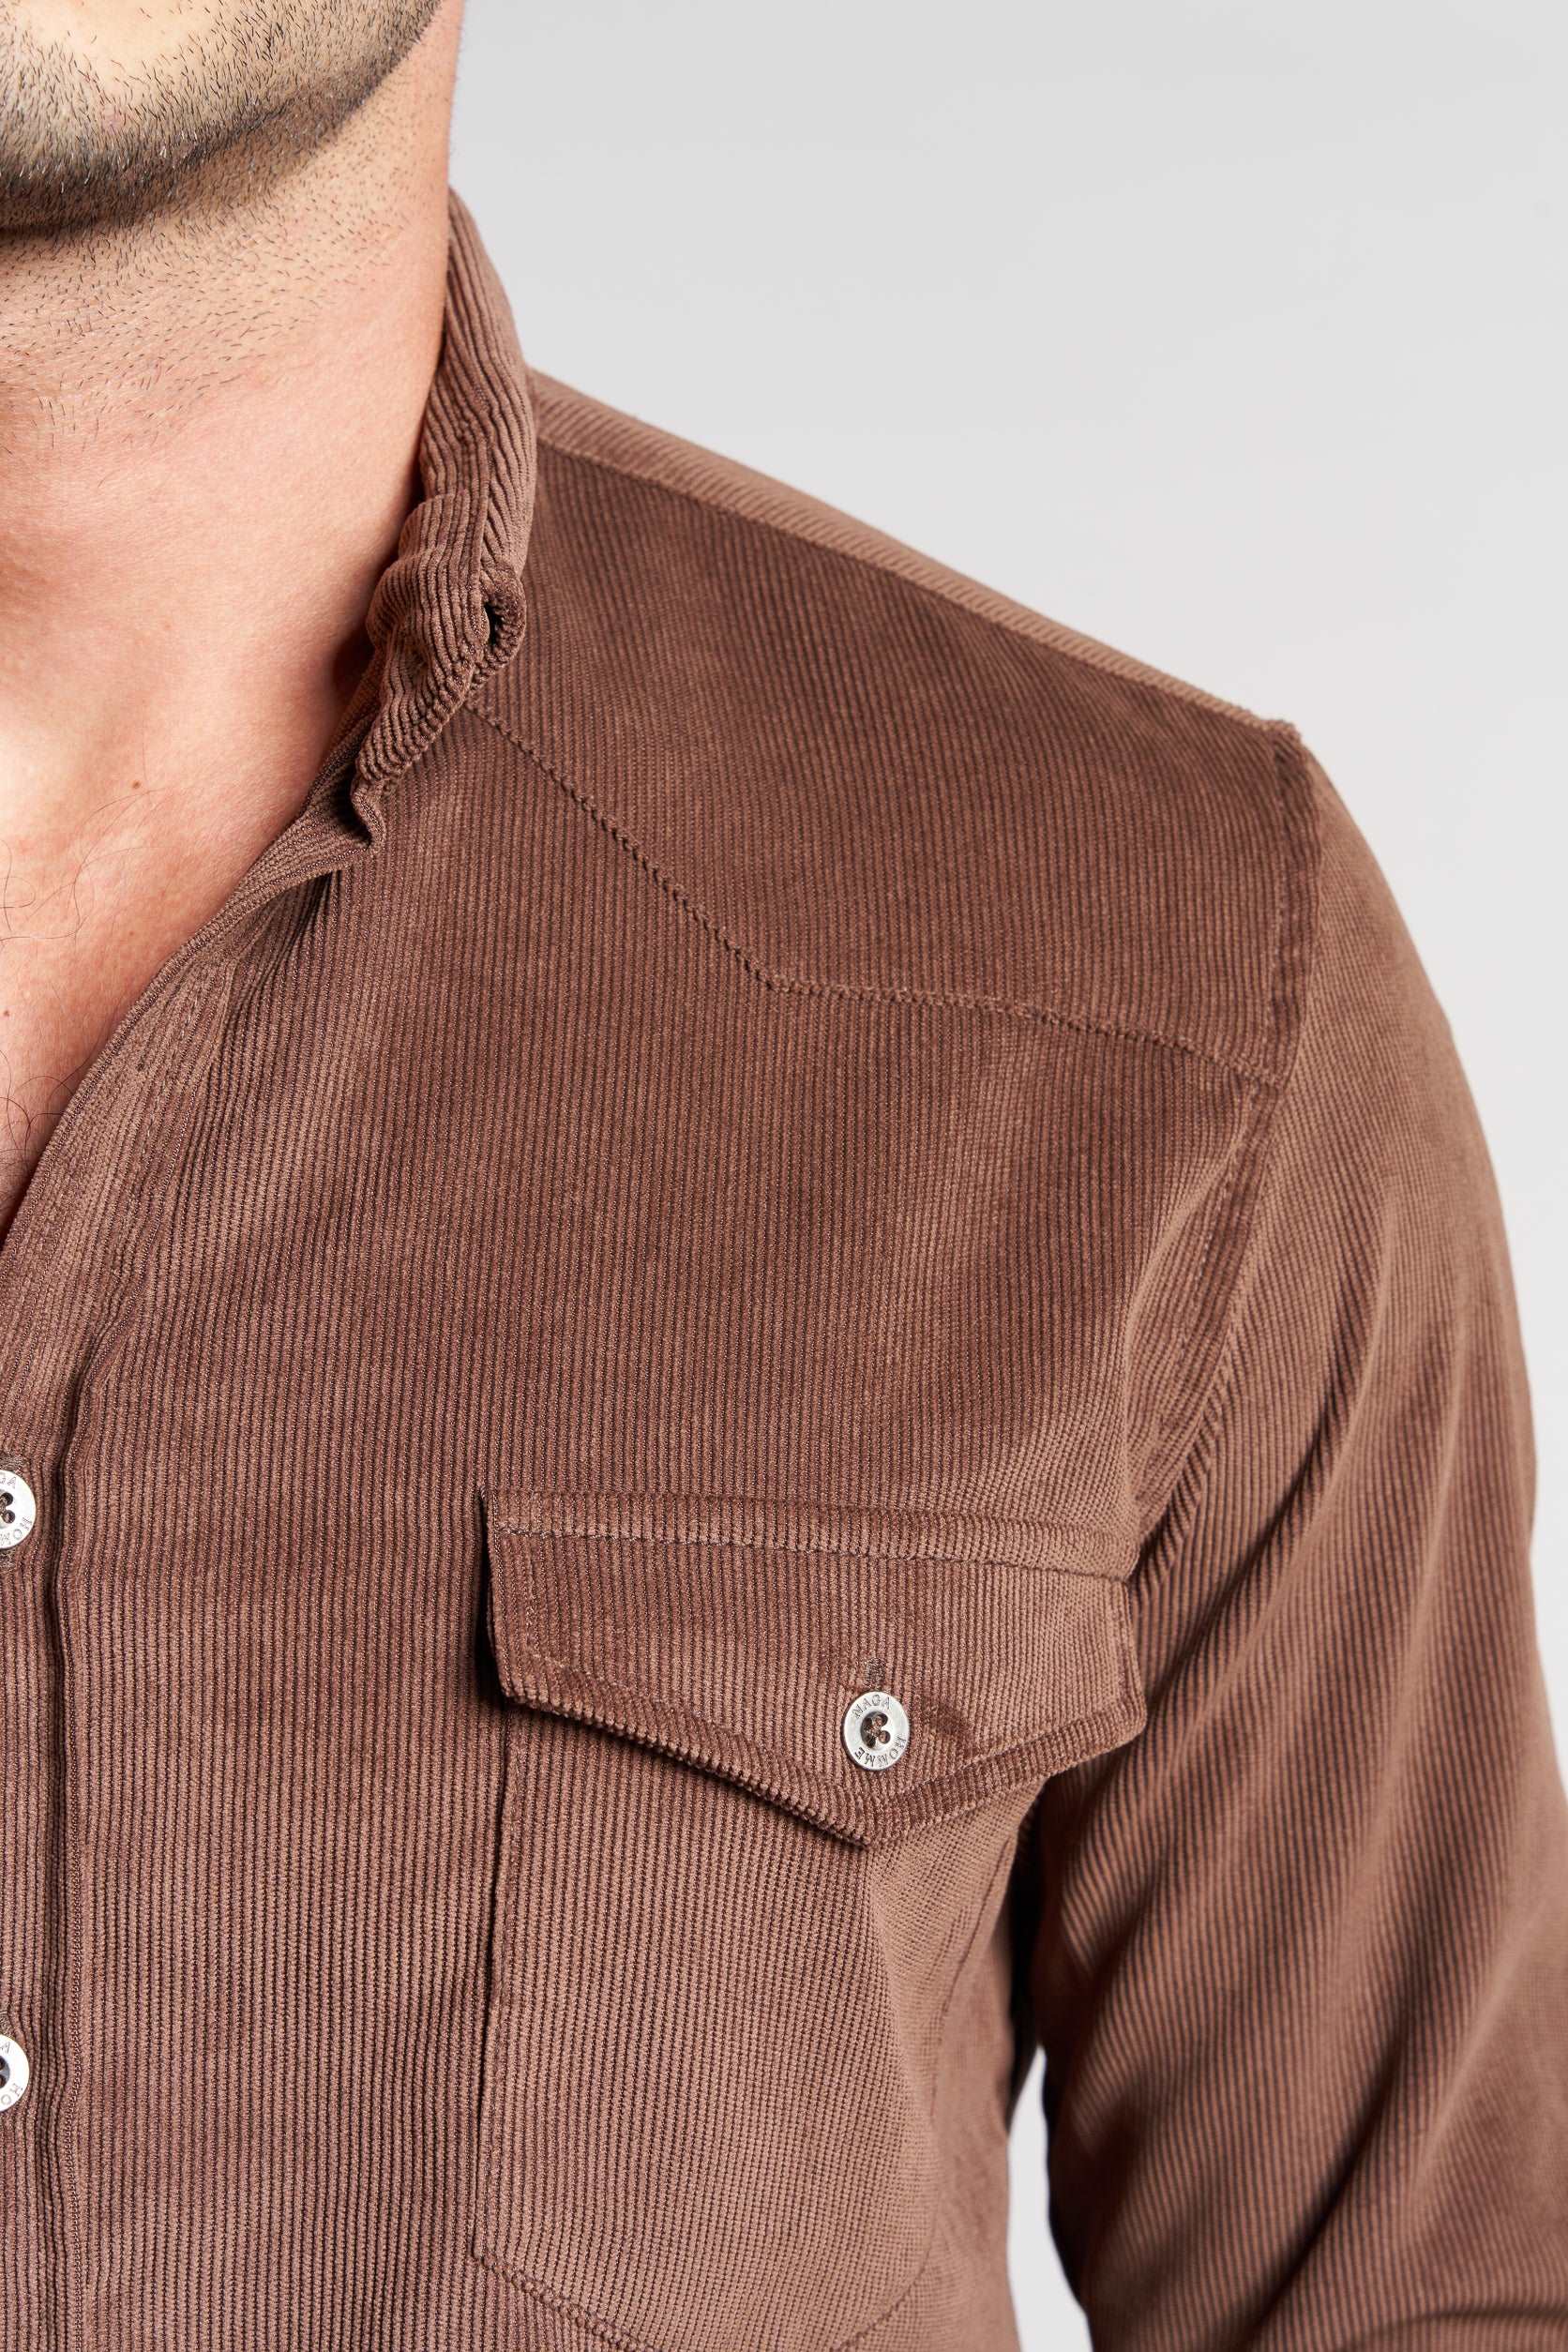 Brown Cotton Casual Shirt(661)